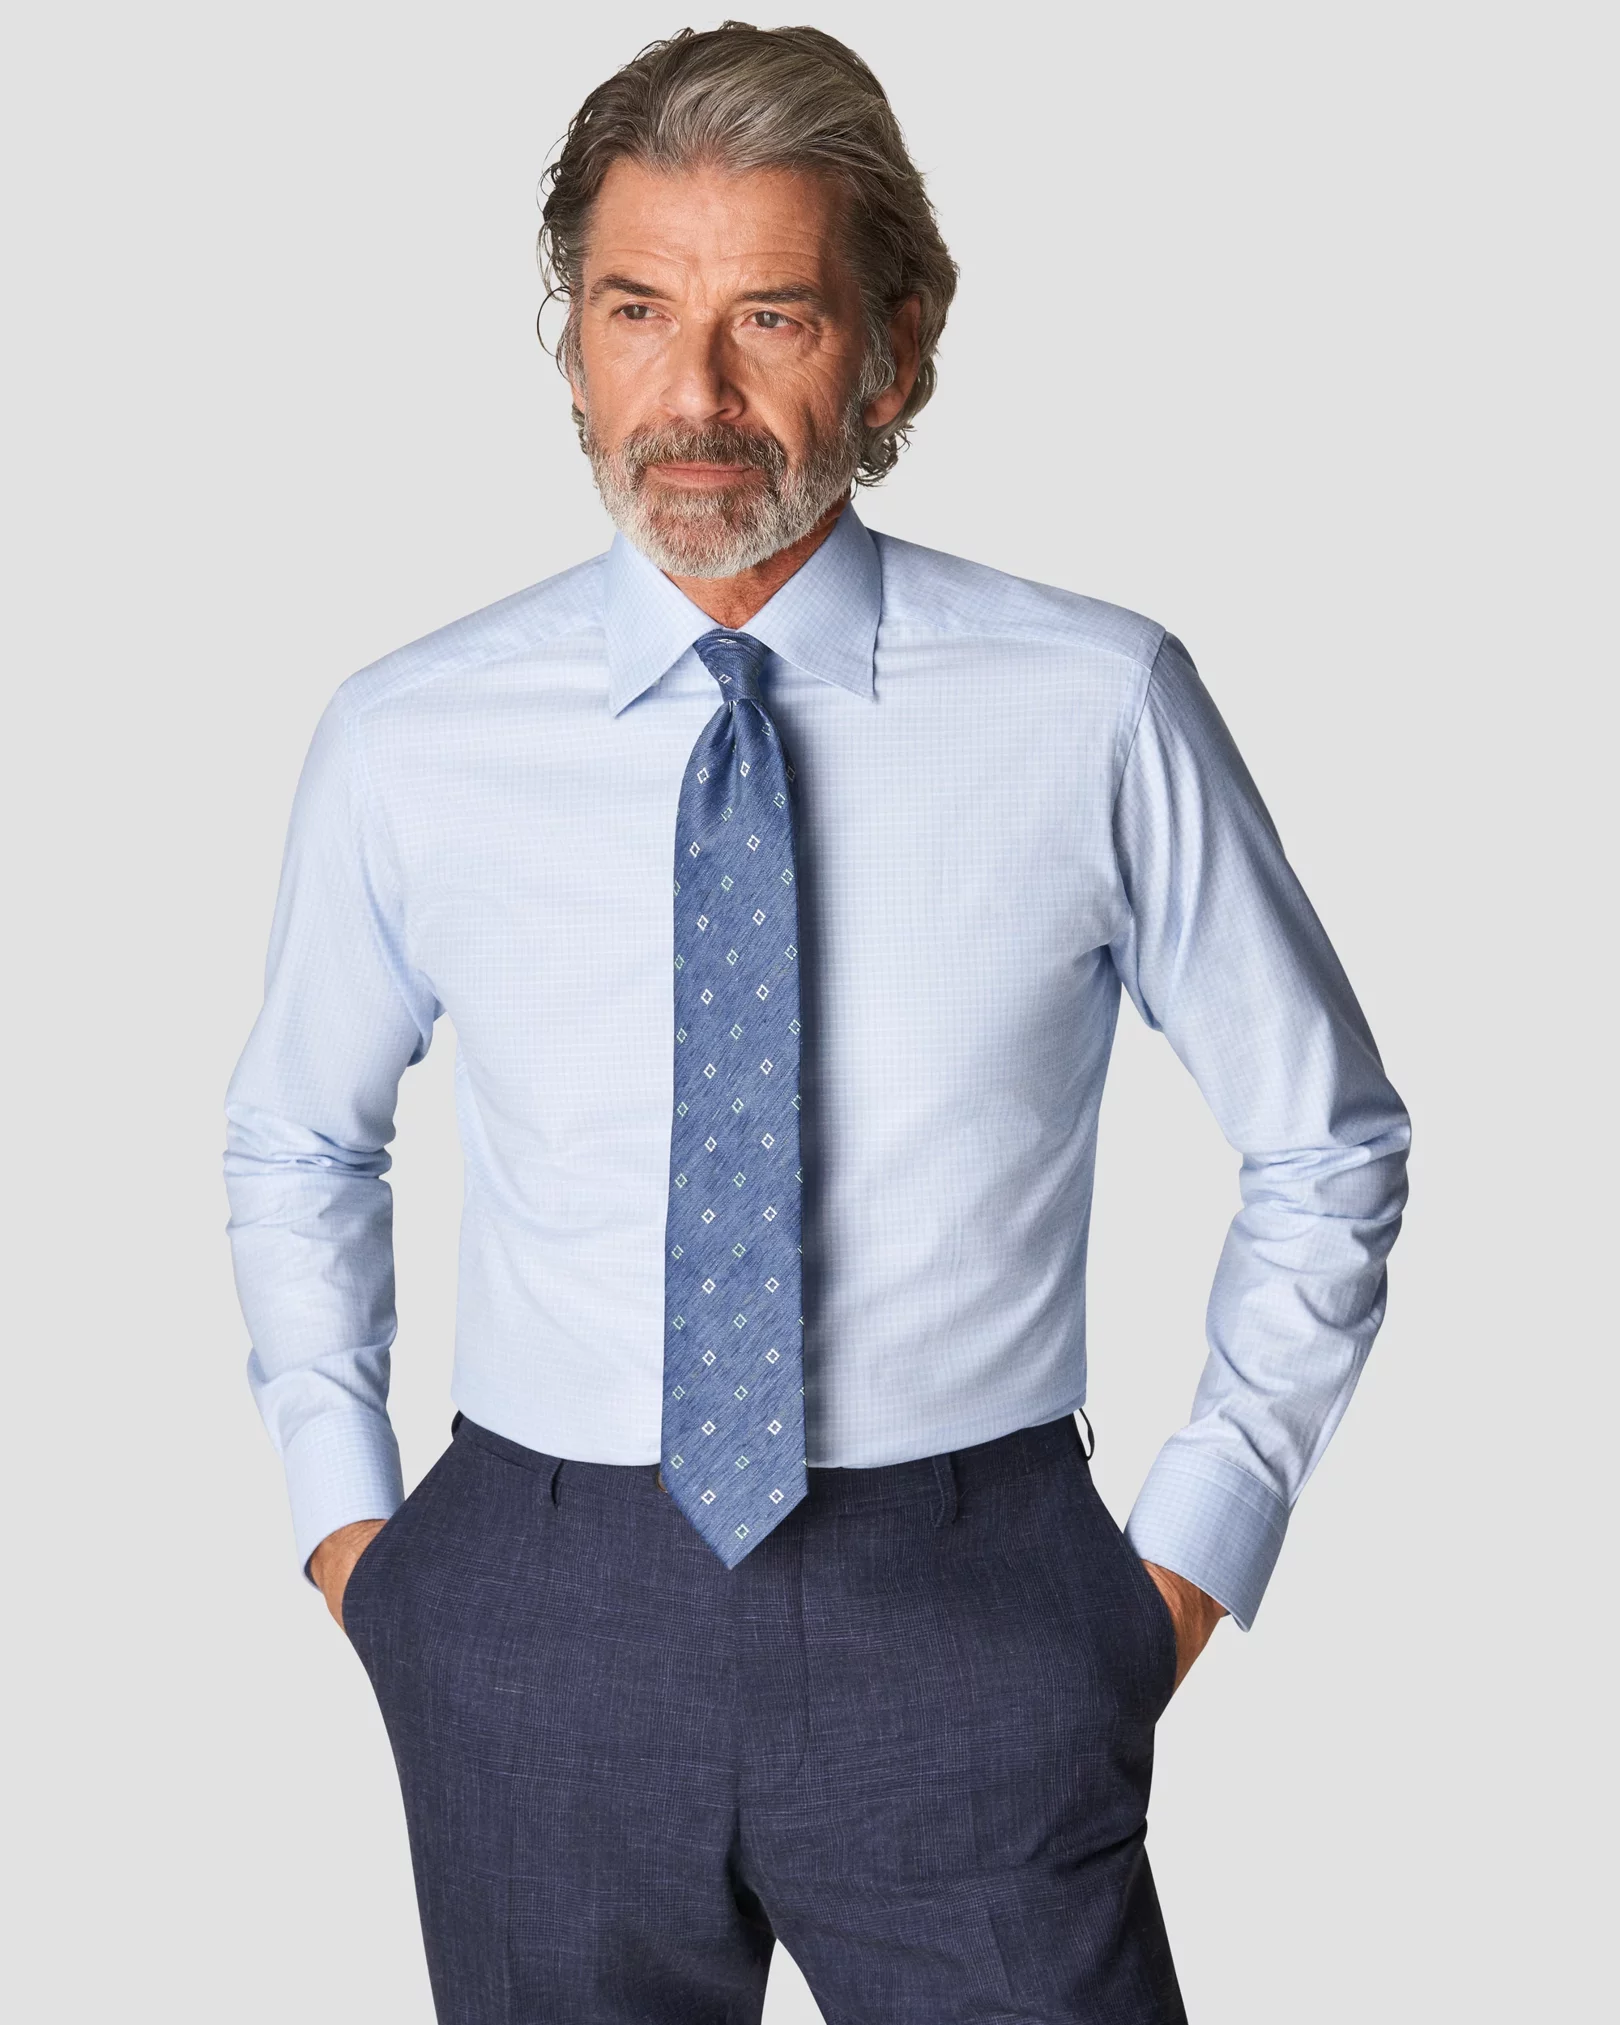 Dressing Light Blue Shirt Gray Pants Stock Photo 178290758 | Shutterstock